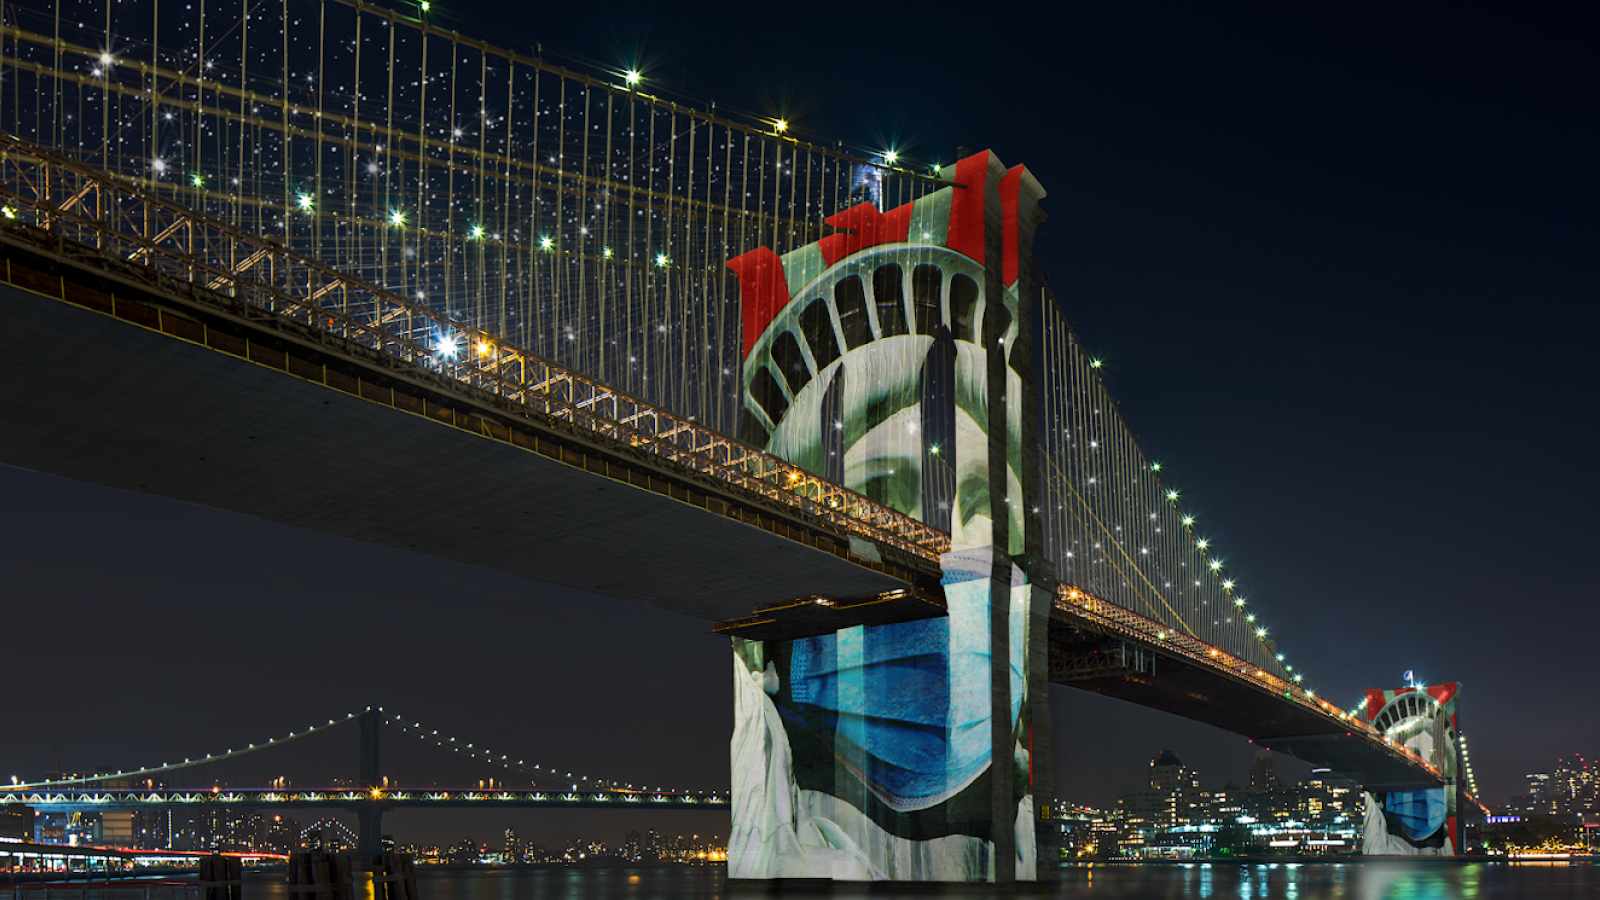 Brooklyn Bridge as redesigned by Shannon Hui